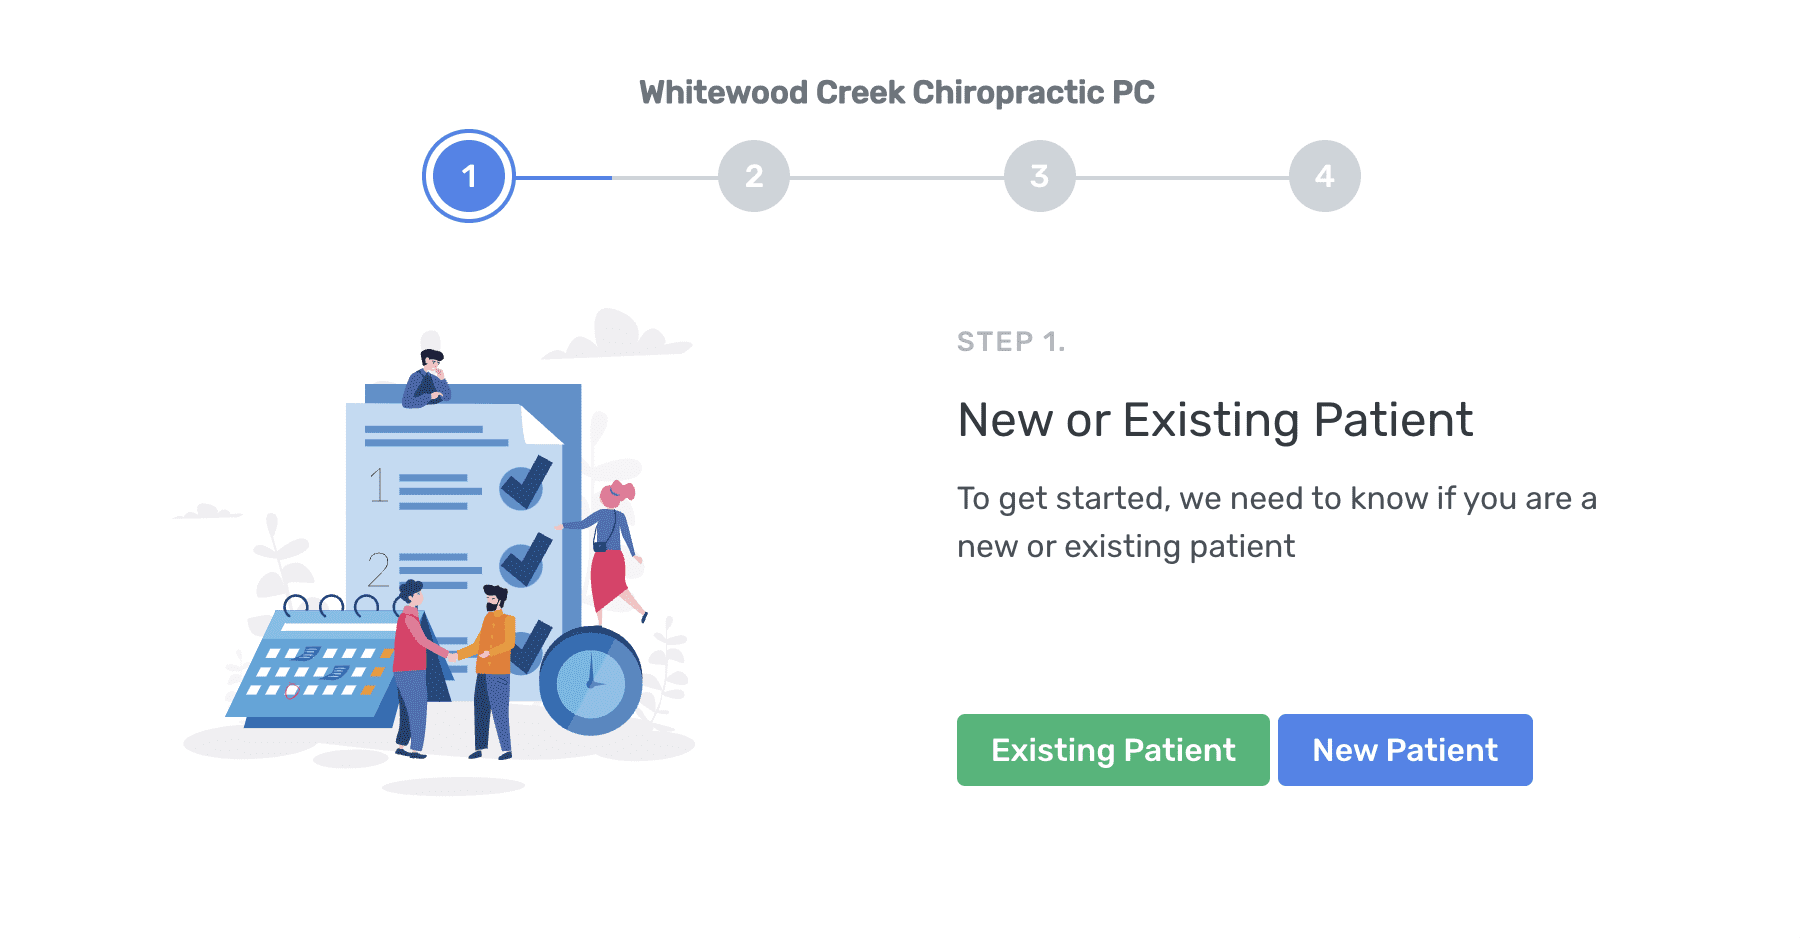 Step 2: Click "New Patient"